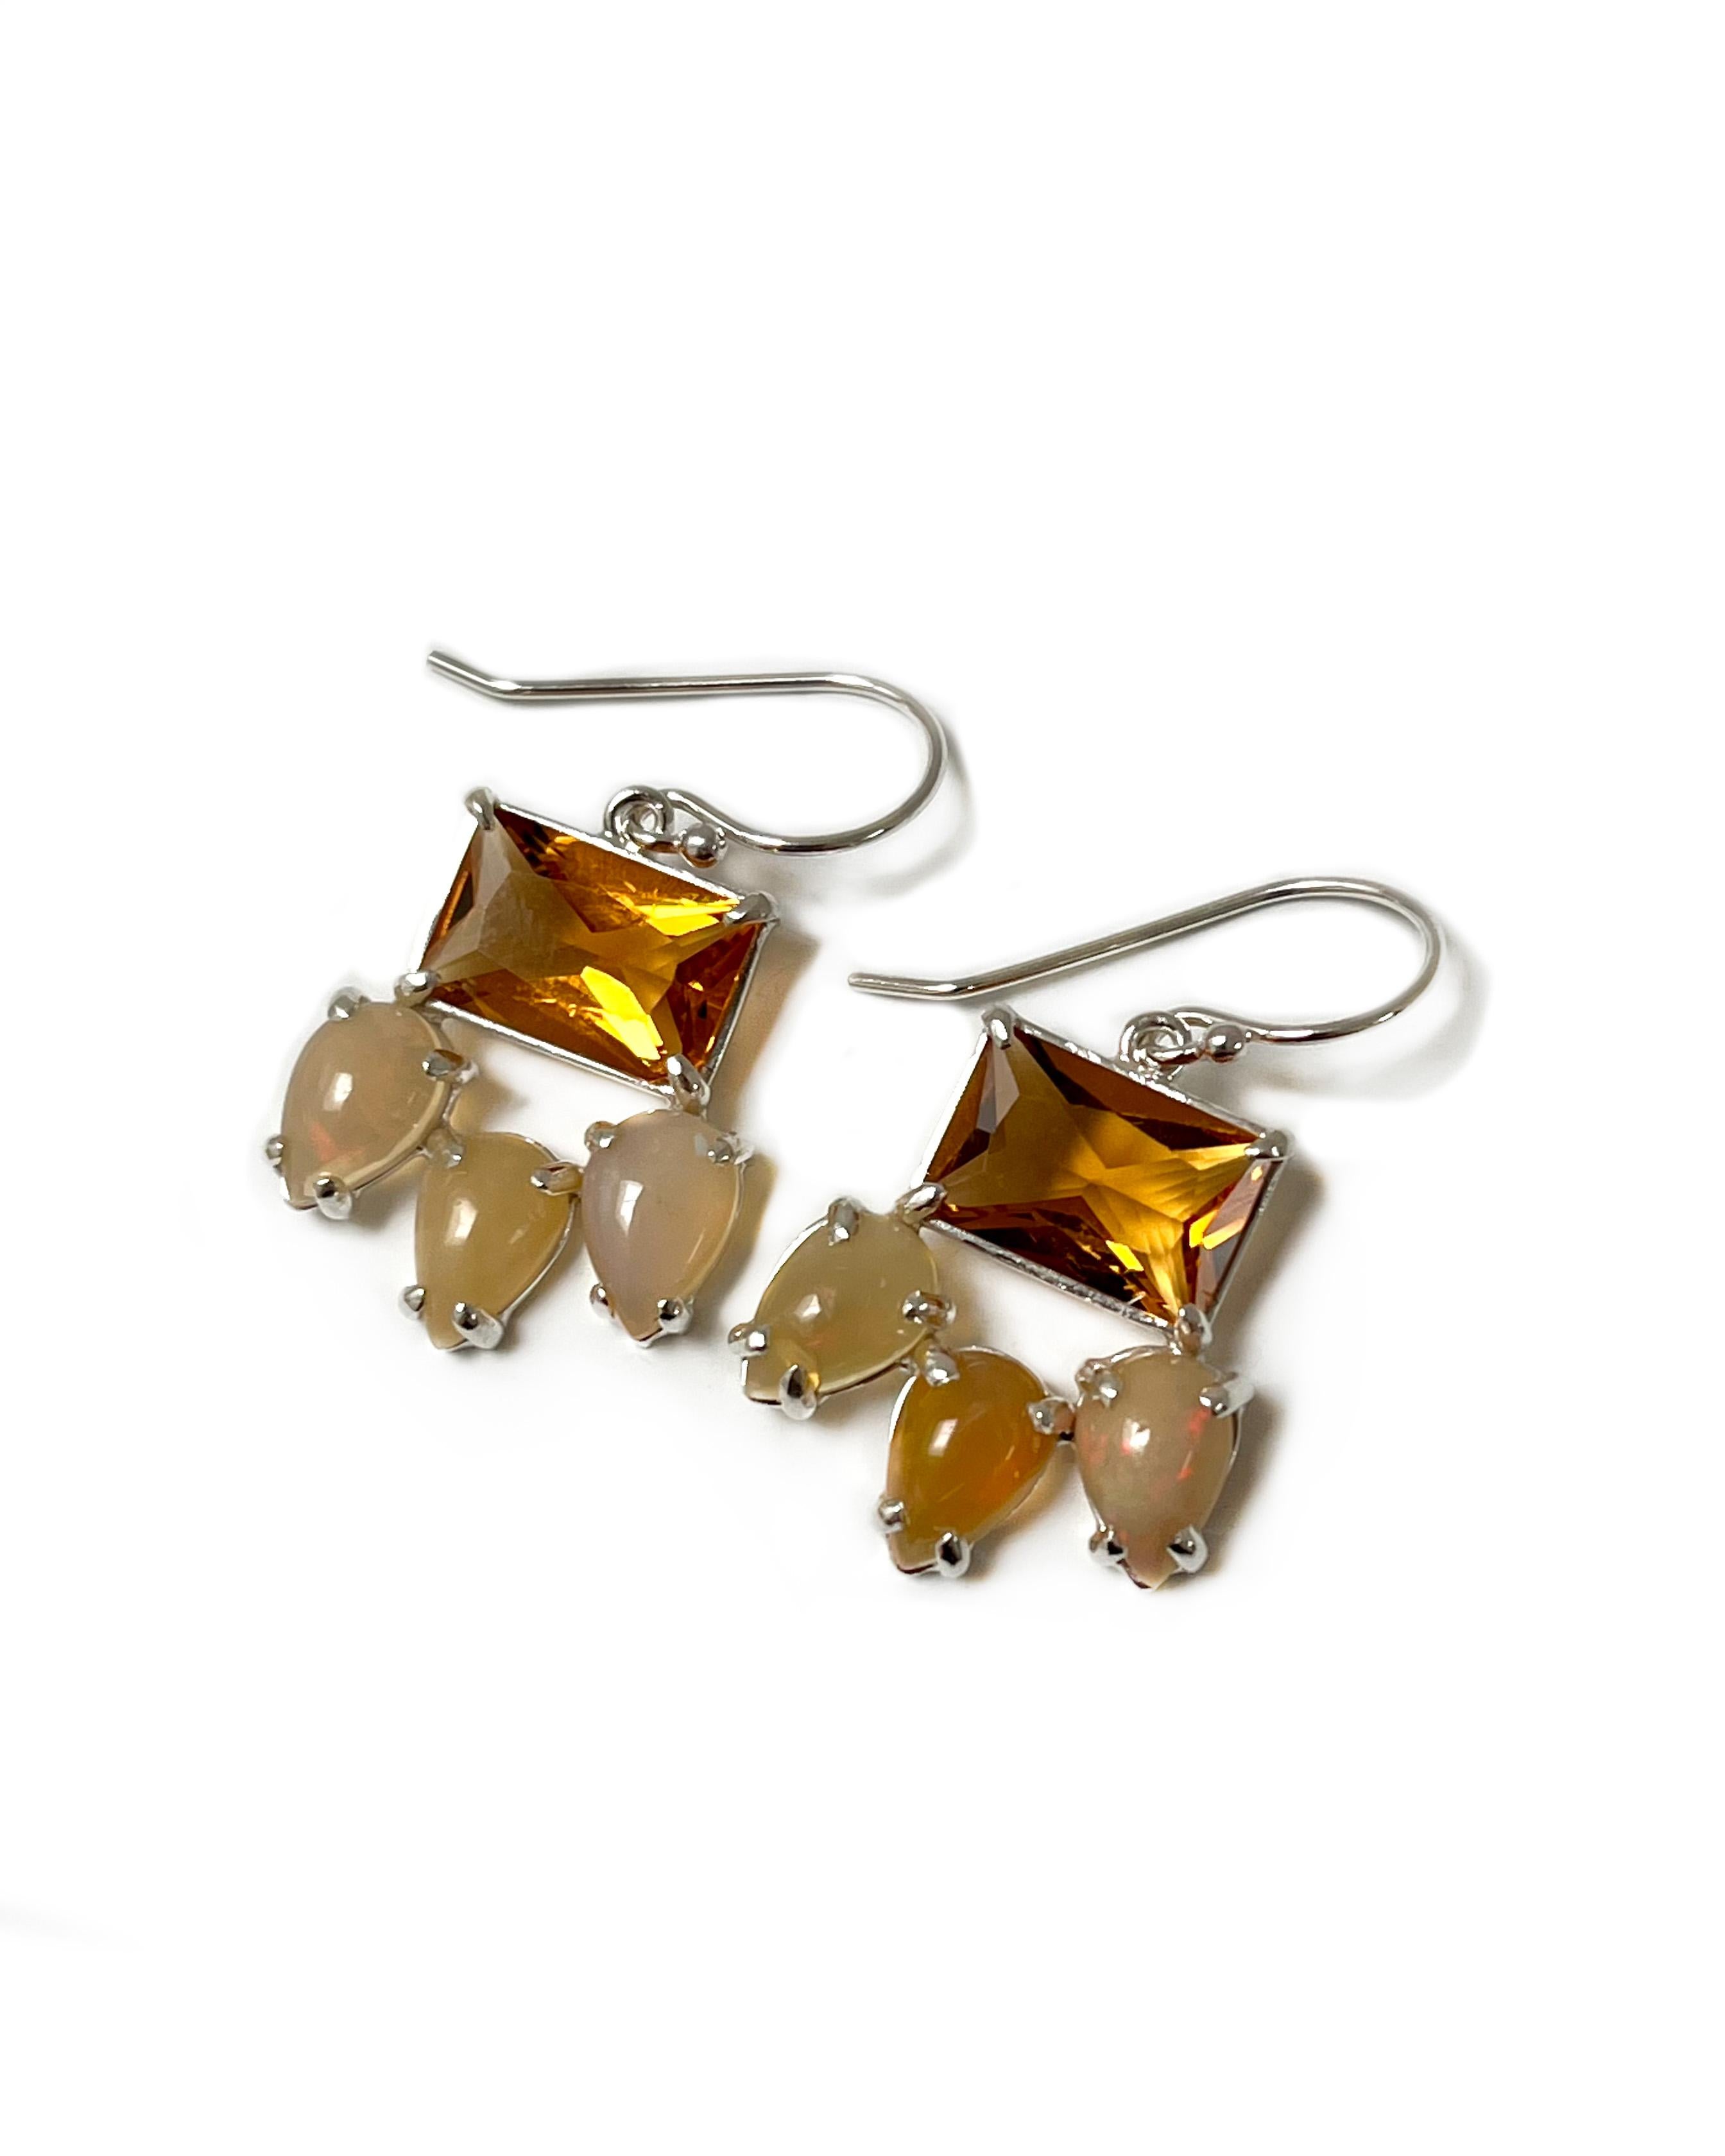 Contemporary Blackthorn Dangle Earrings in Orange Quartz, Opal, Sterling Silver